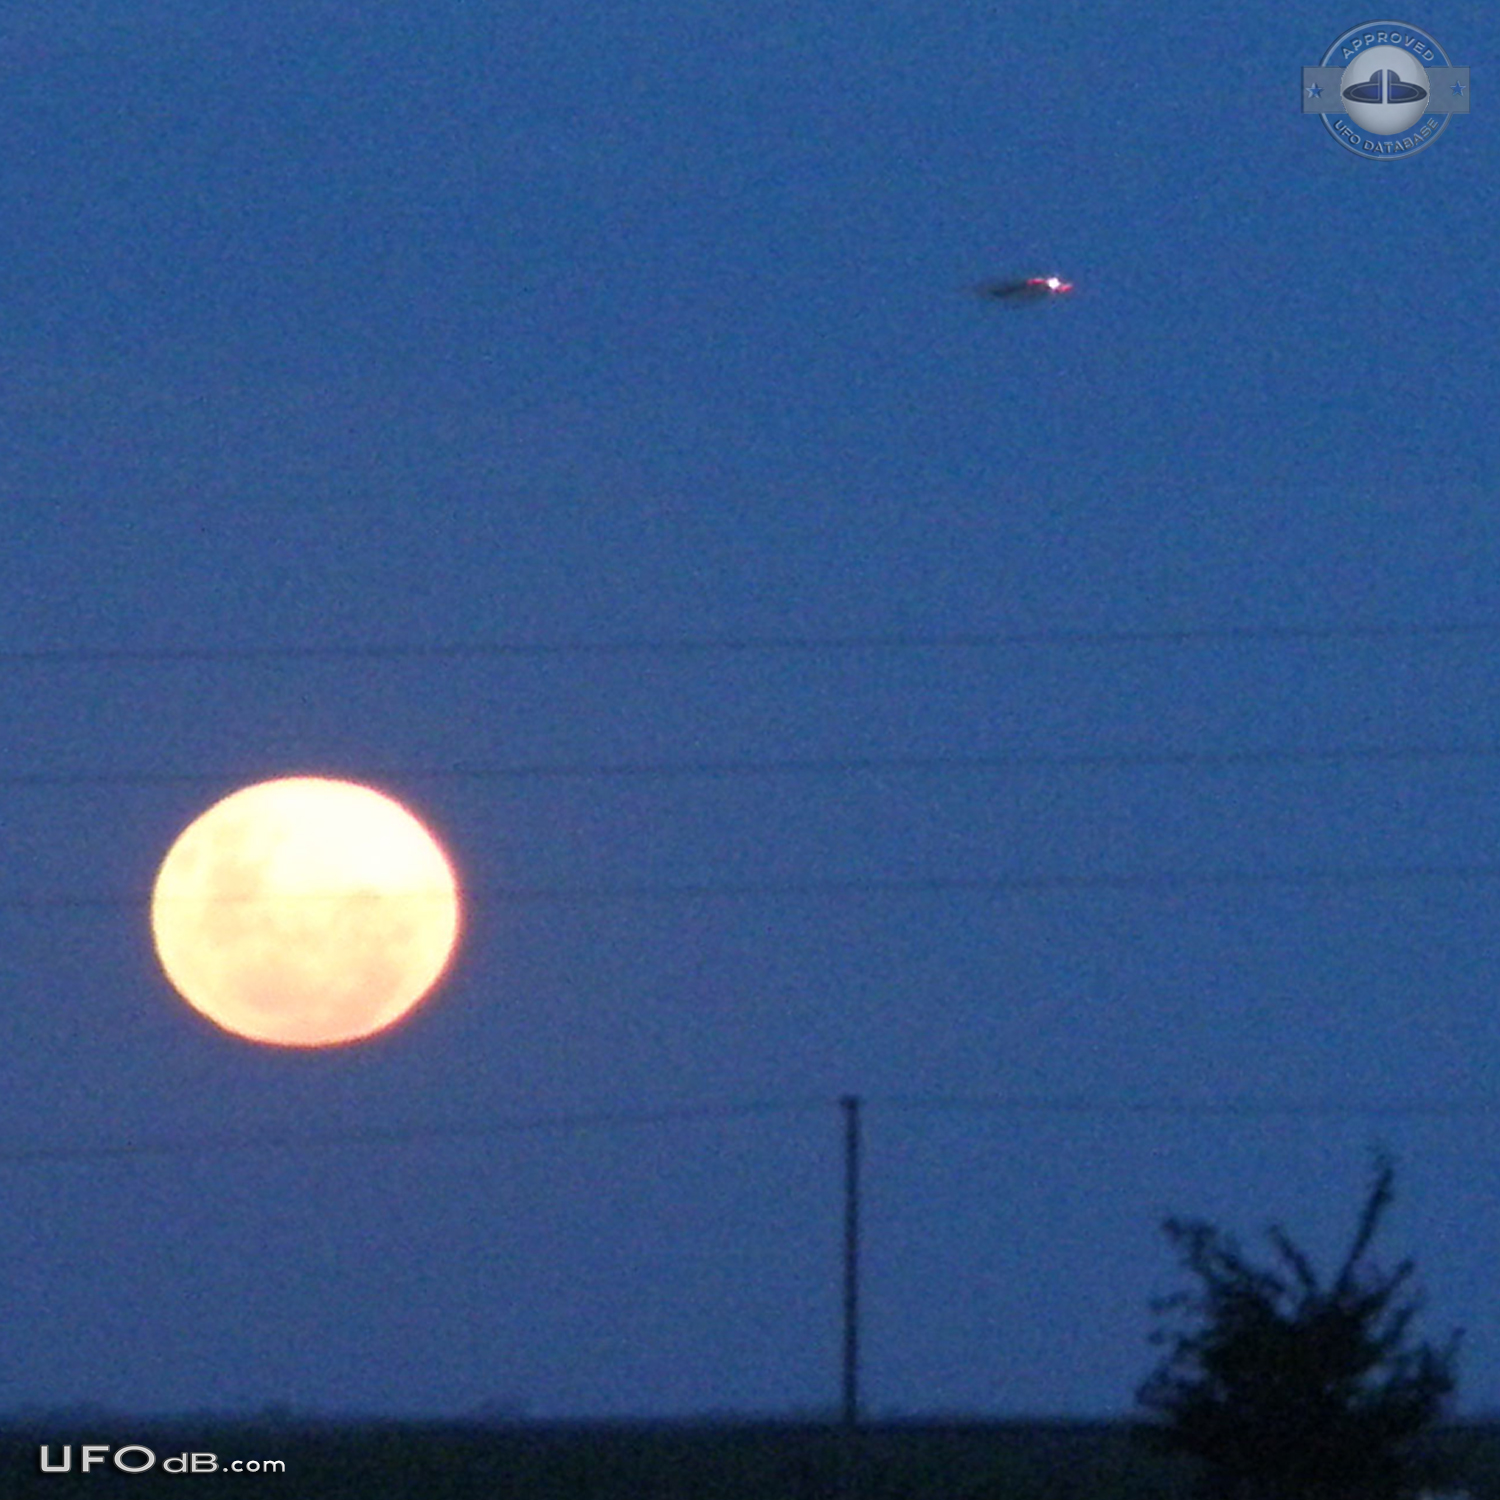 Full Moon Picture get a passing UFO in Venado Tuerto, Argentina 2009 UFO Picture #492-2